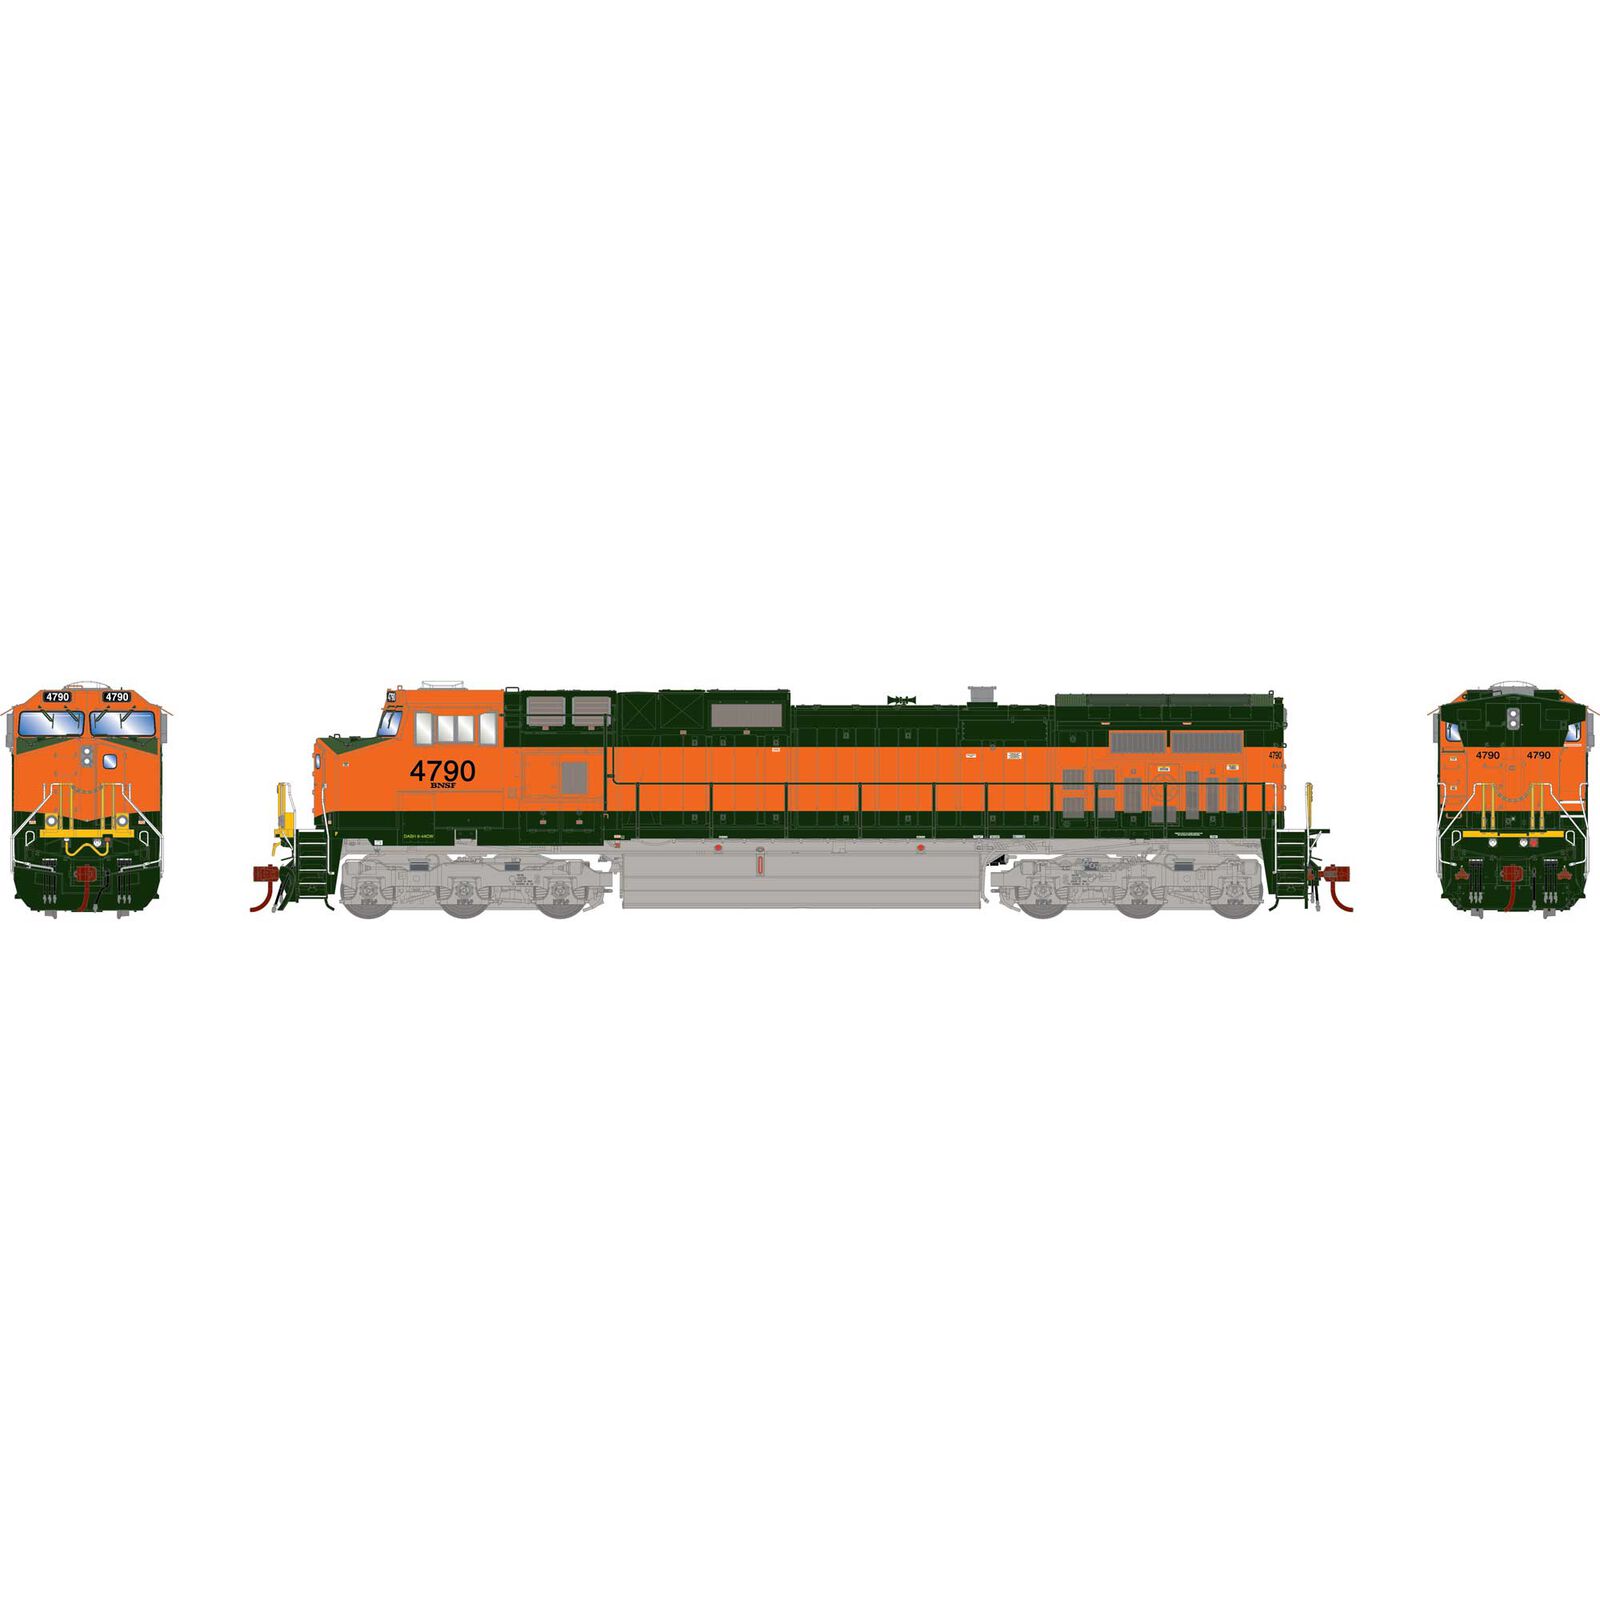 HO Dash 9-44CW Locomotive, BNSF #4790